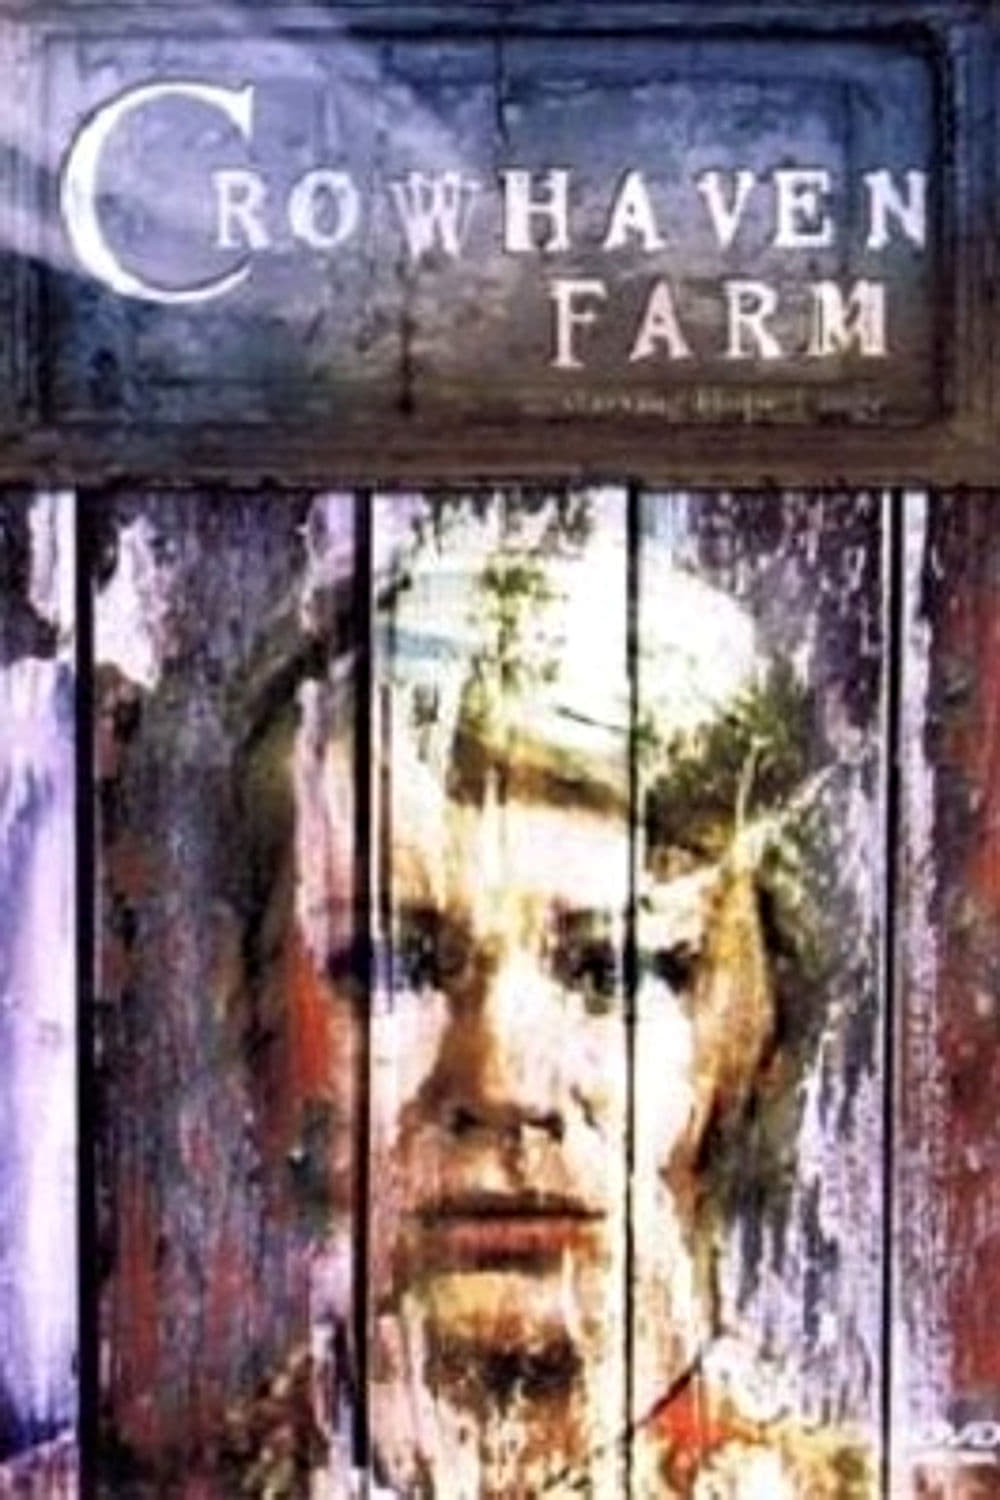 Crowhaven Farm (1970)